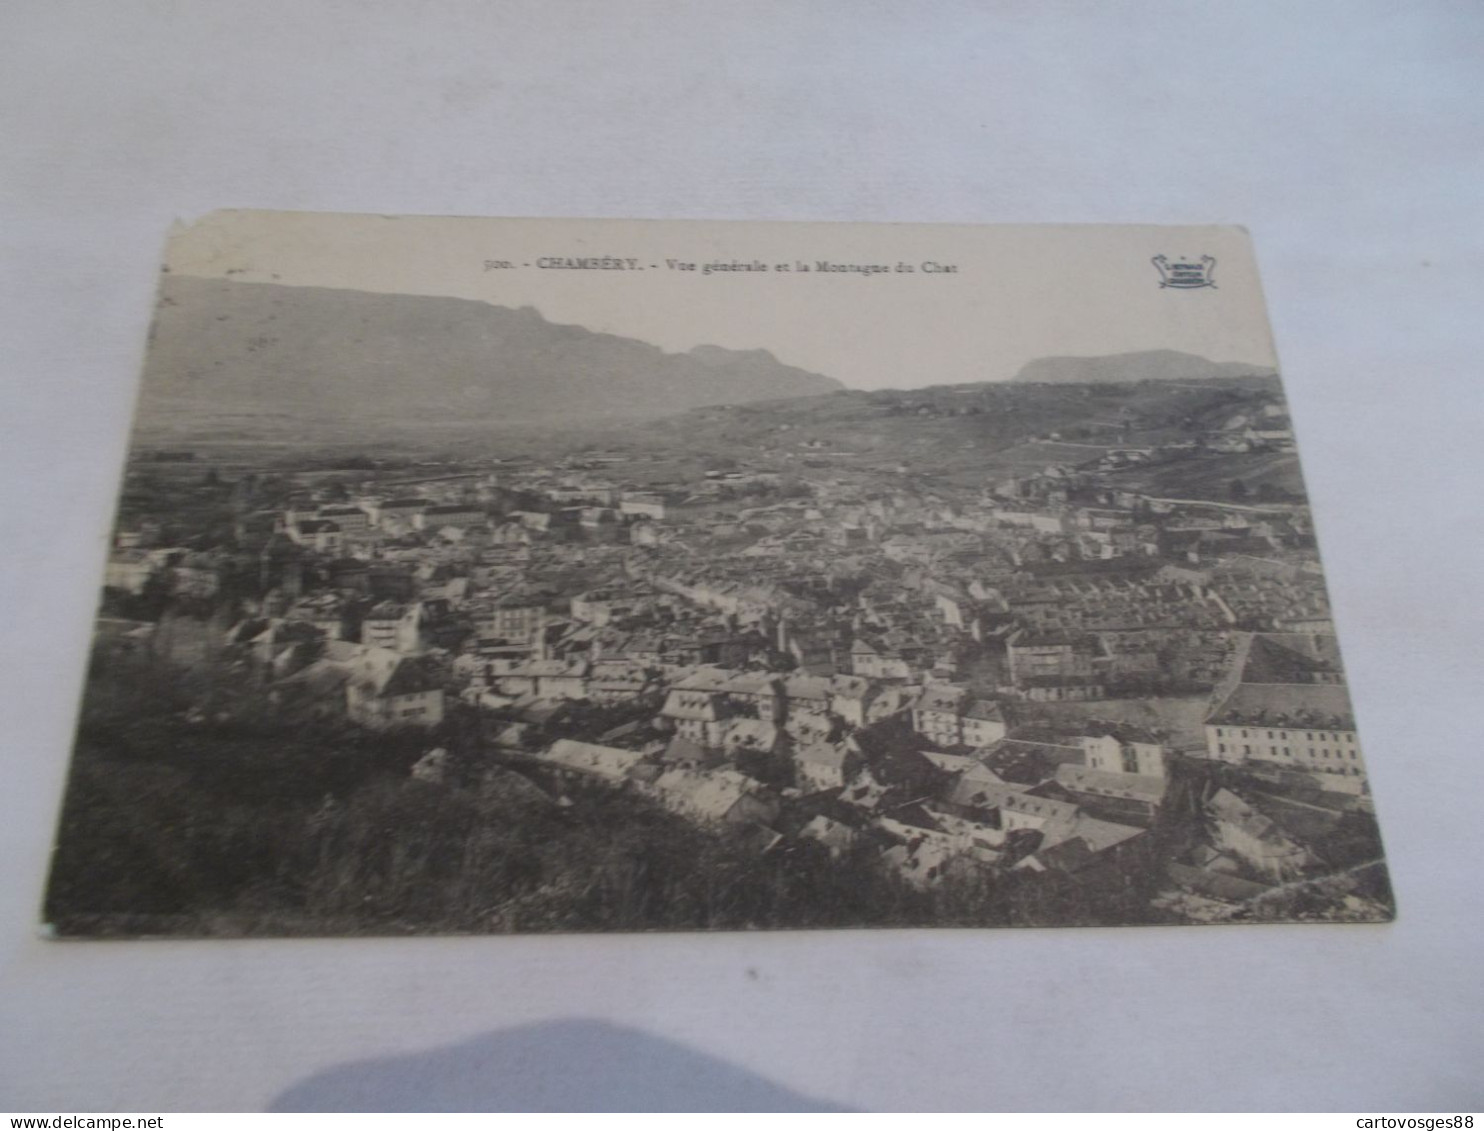 CHAMBERY ( 73 Savoie ) VUE GENERALE ET LA MONTAGNE DU CHAT  1910 - Chambery